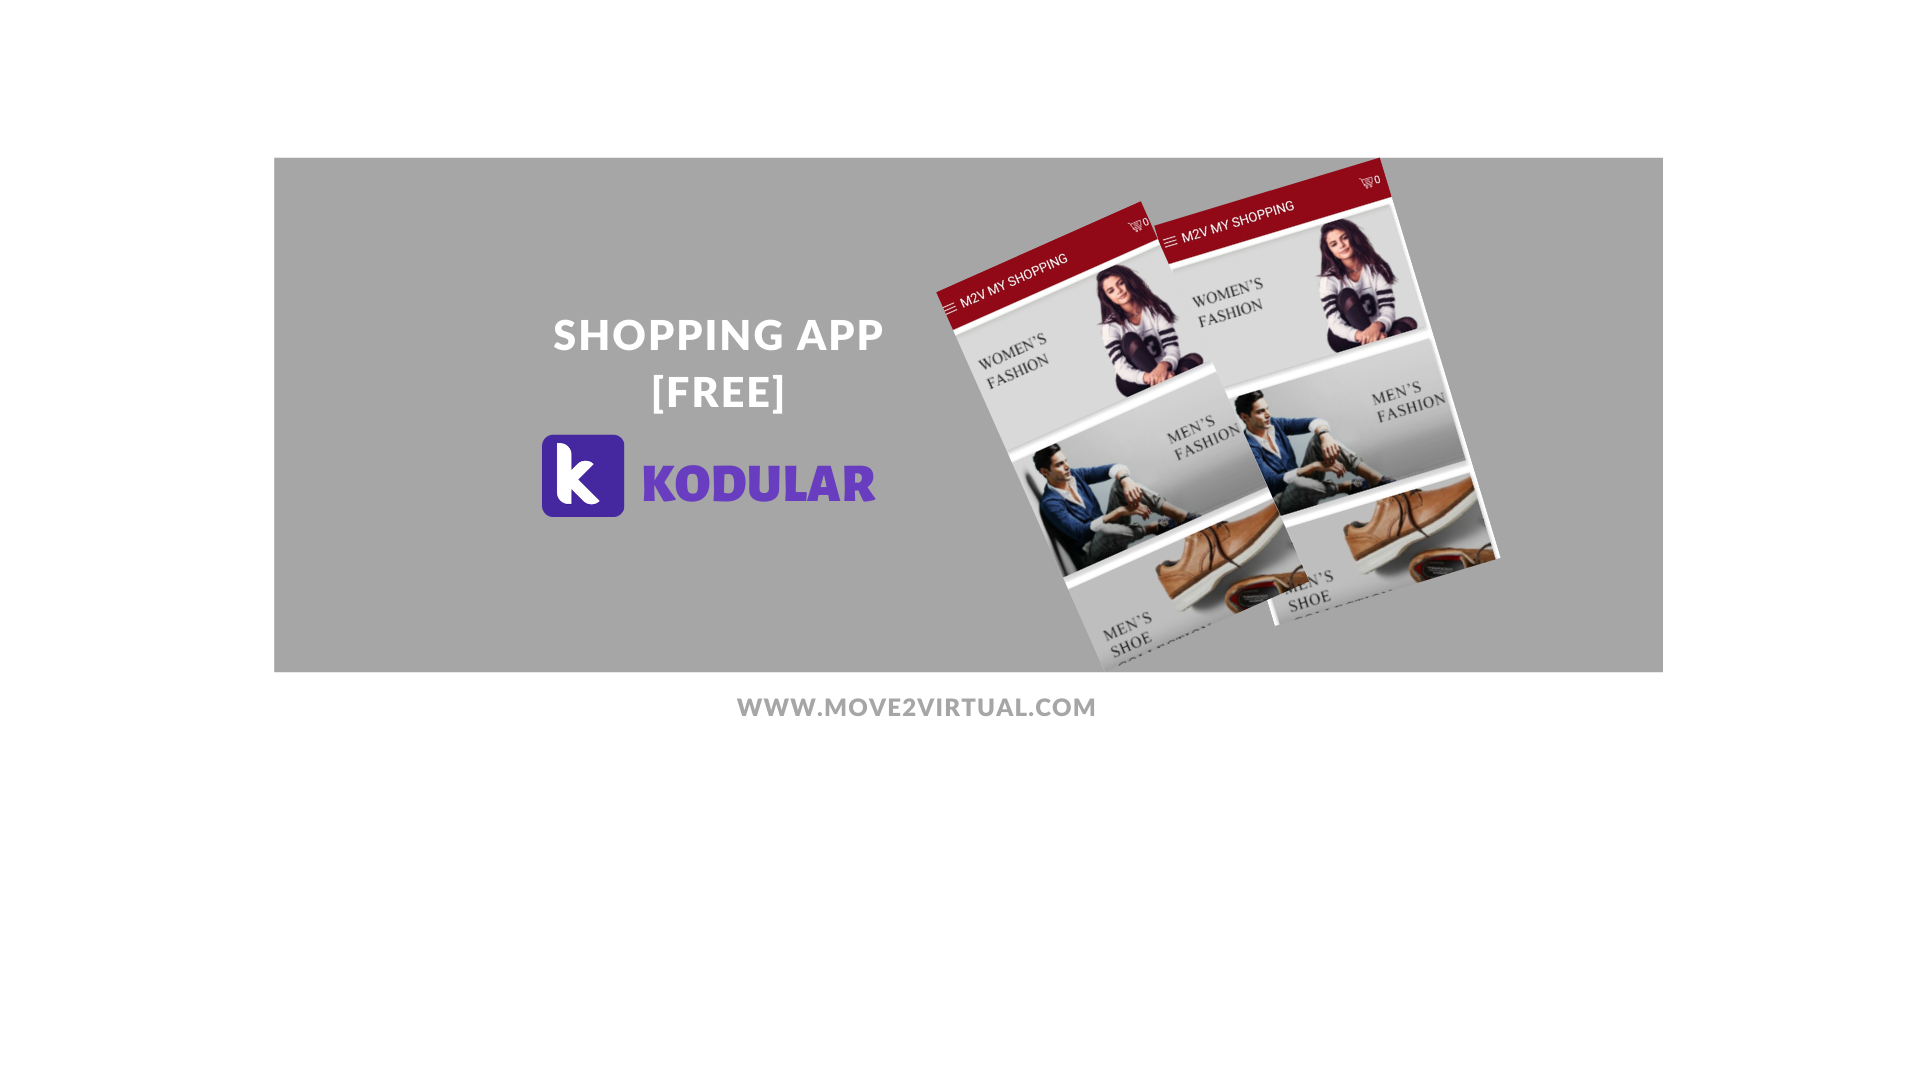 https://movetovirtual.blogspot.com/2019/02/kodular-online-storeshopping-app-free.html